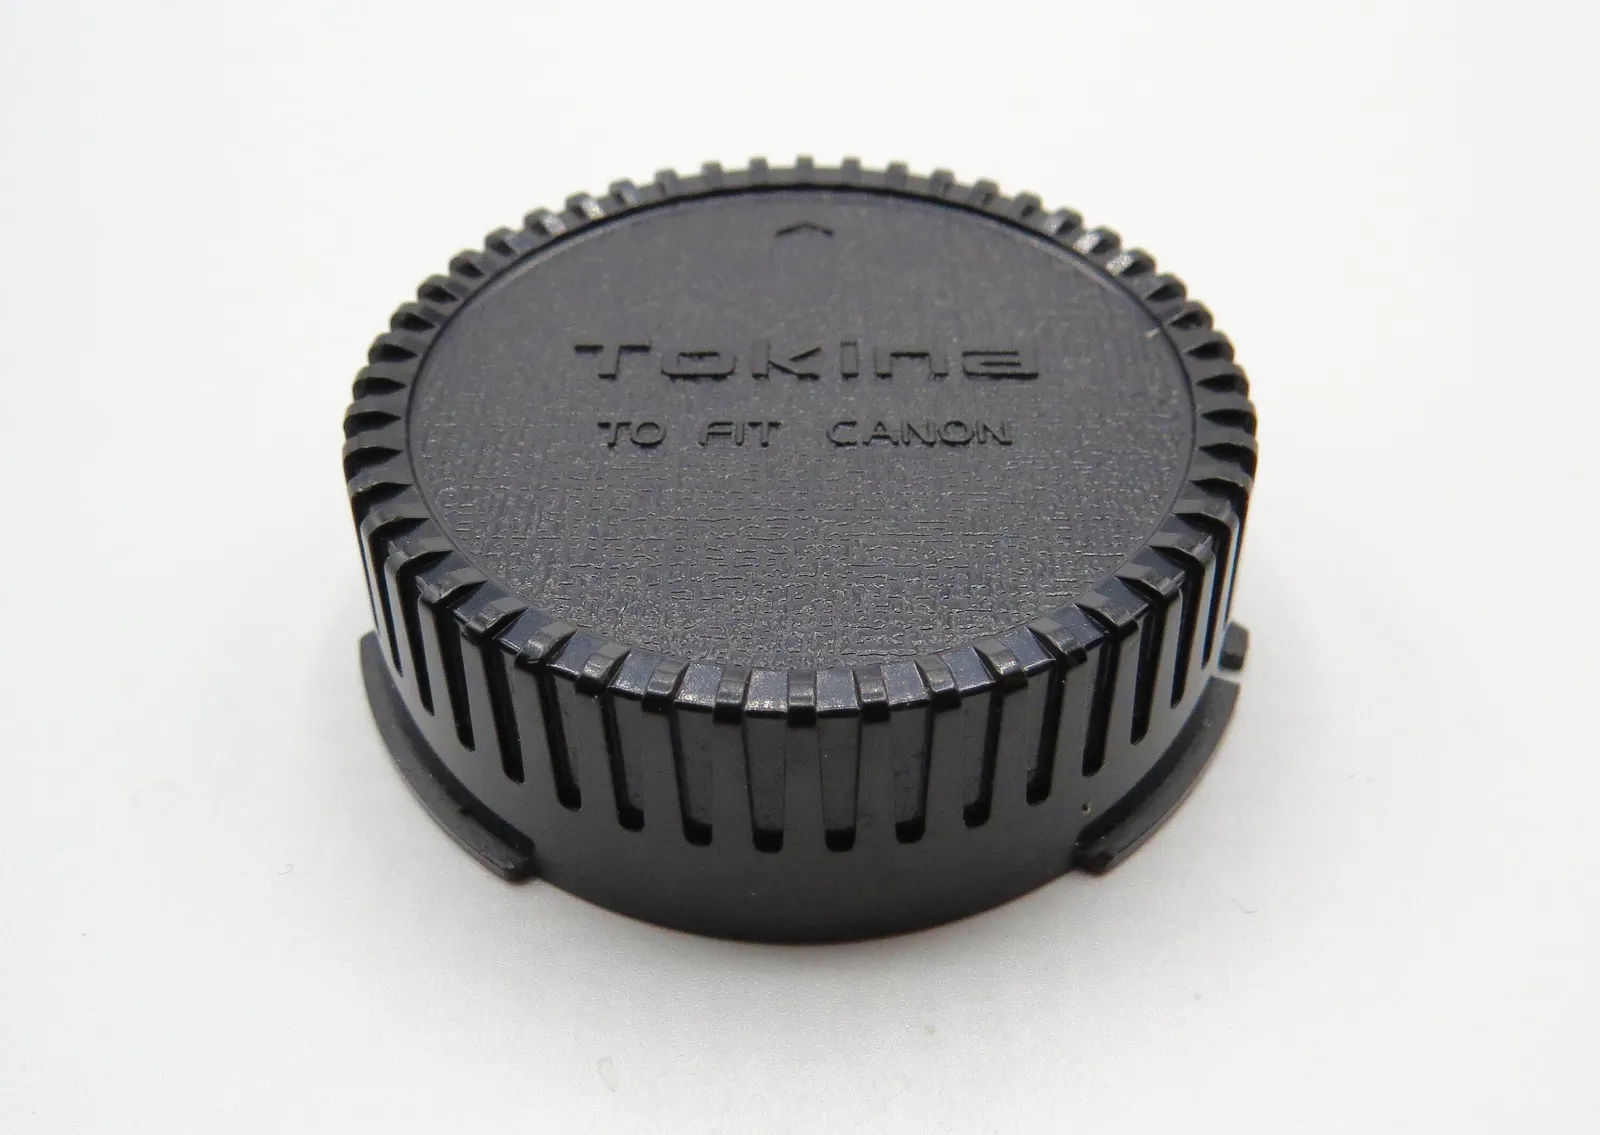  Tokina for Canon Black Plastic Rear Lens Cap - Fits Canon AE-1 Camera Lens 